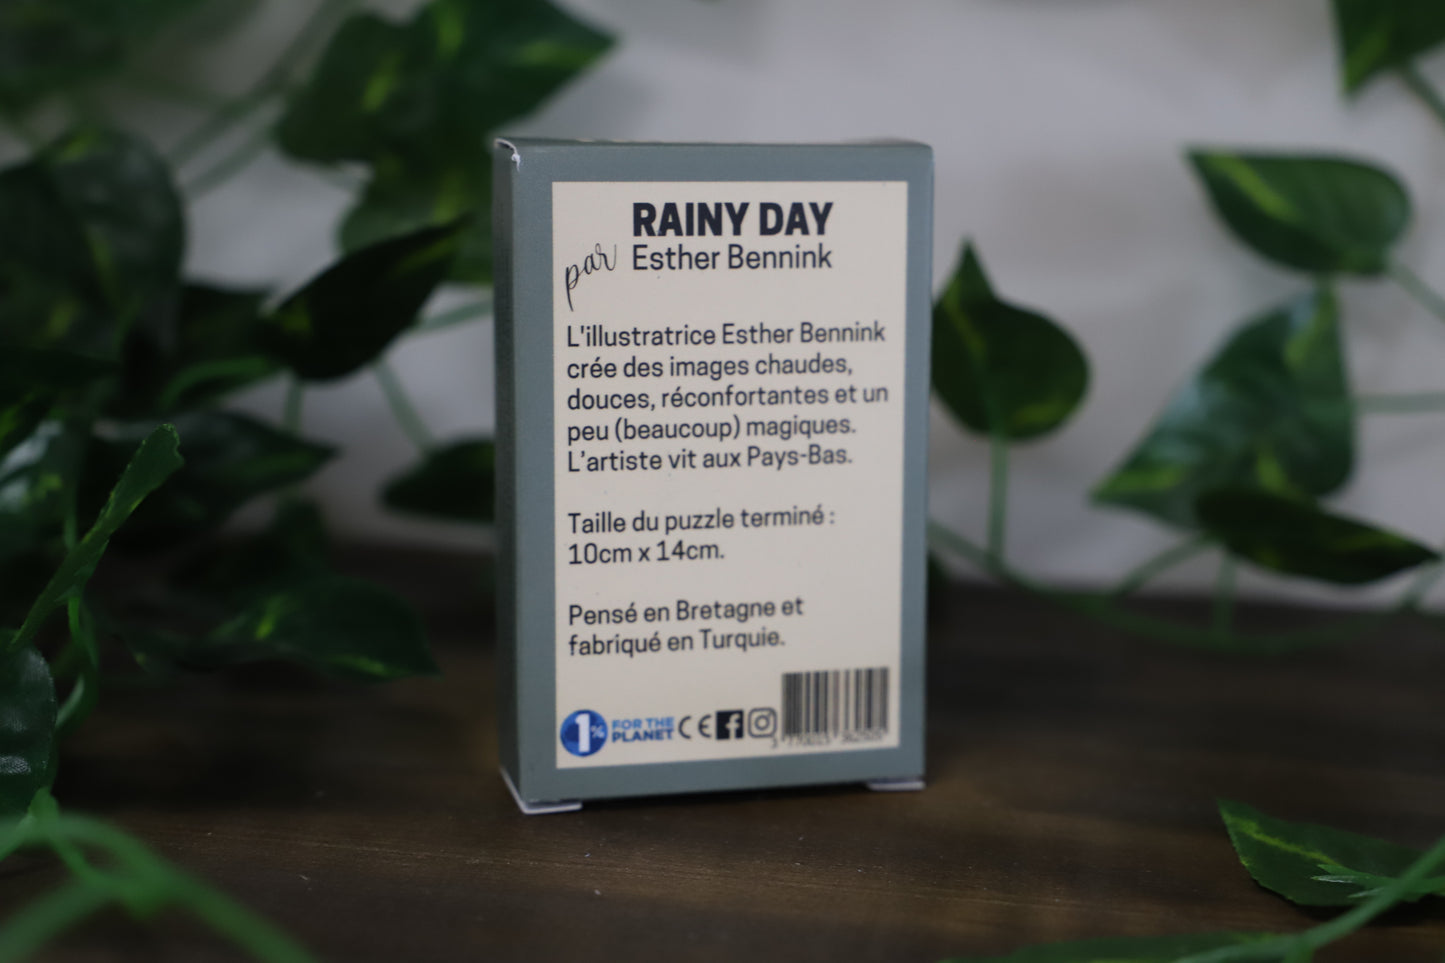 Rainy Day by Trevell 99pc